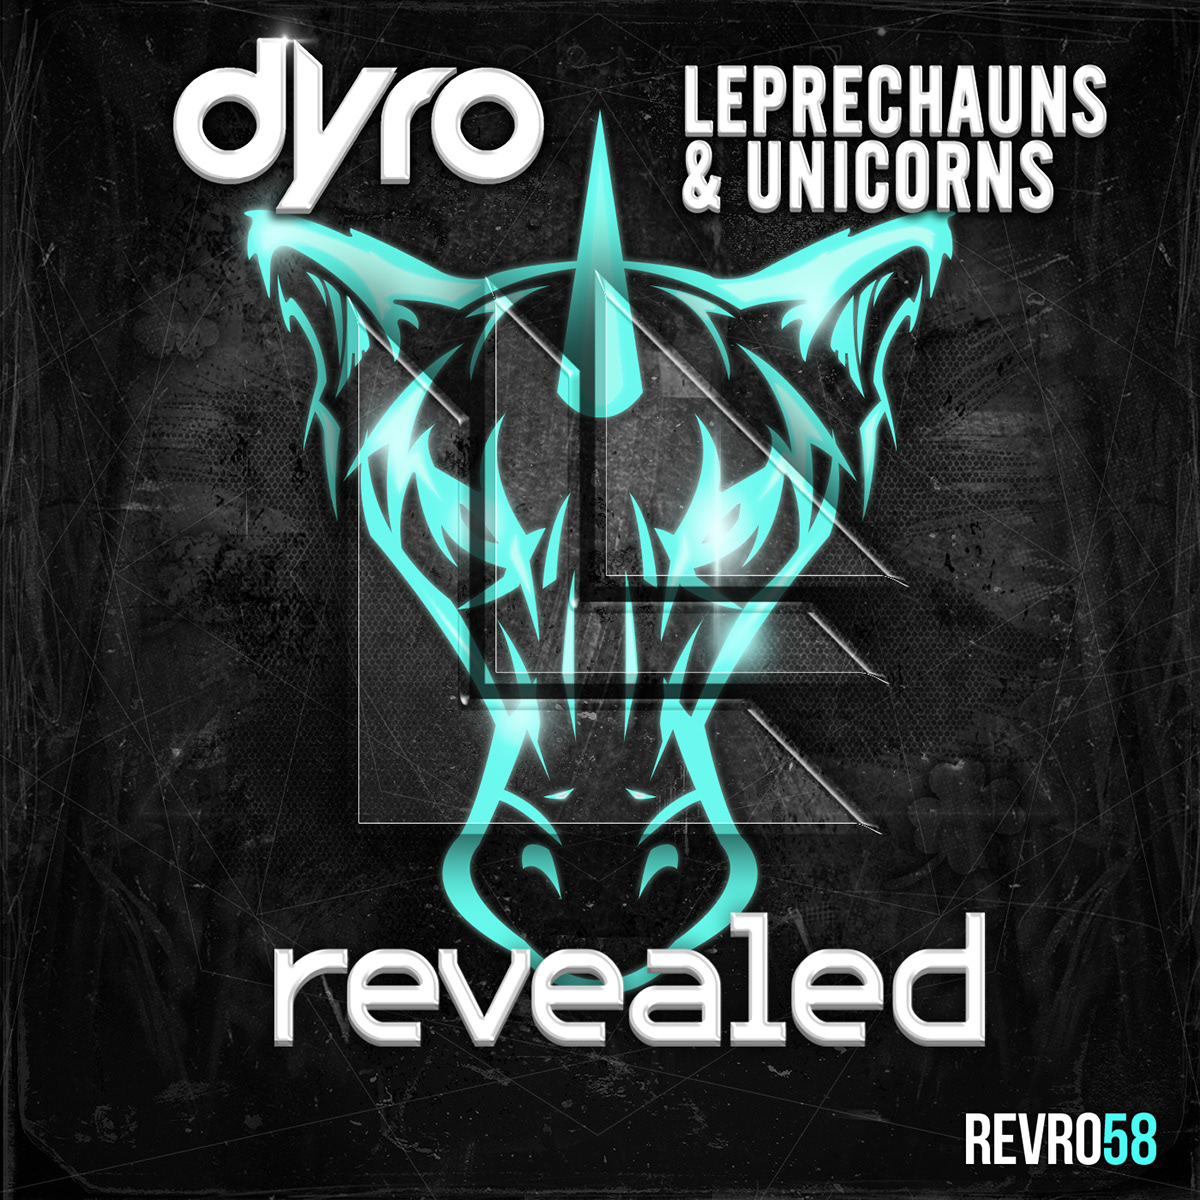 revealed Recordings Revealed Recordings Hardwell Dyro leprechauns unicorns design cover Album edm grunge